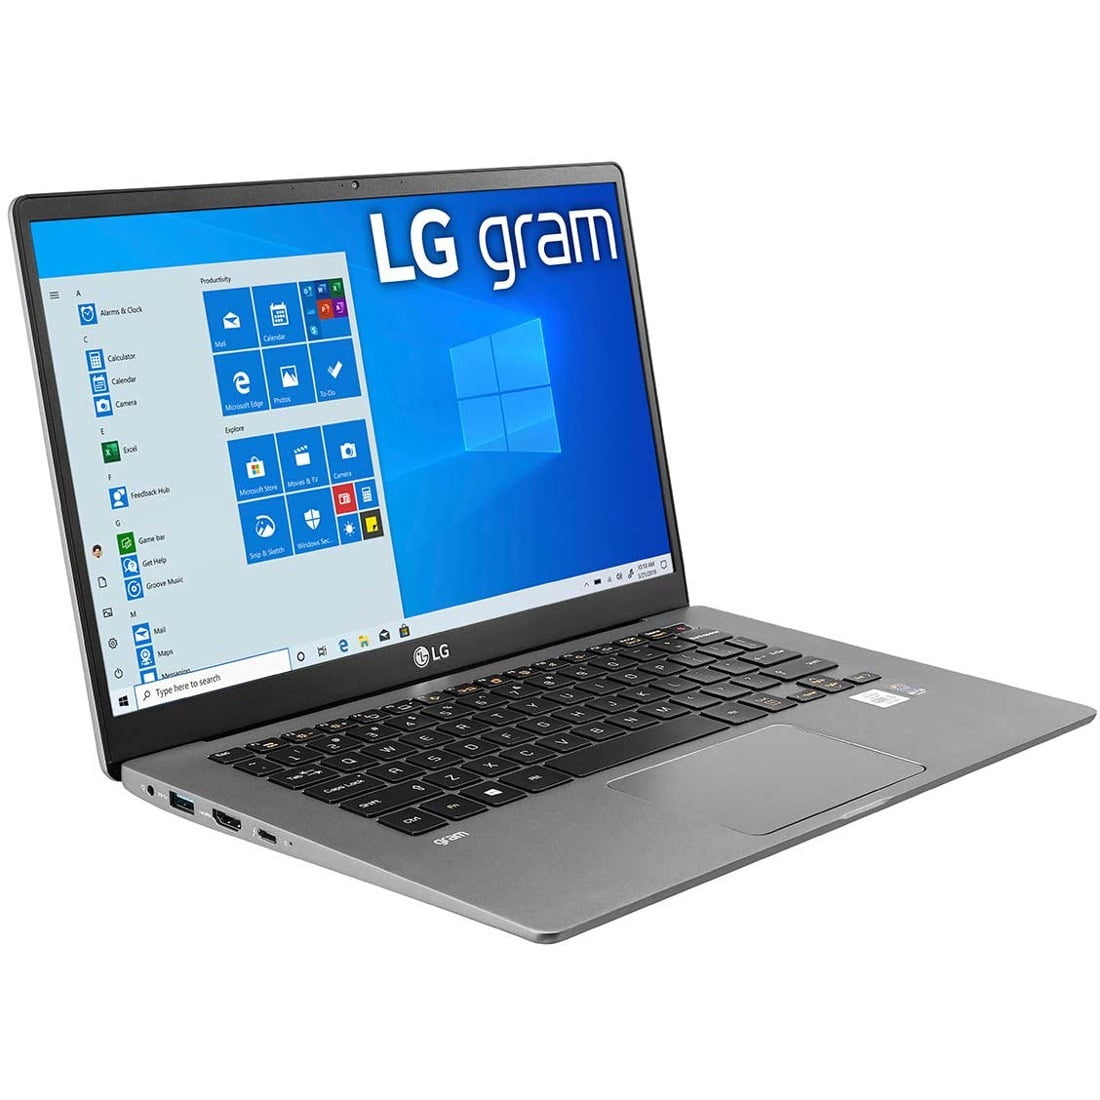 lg gram laptop